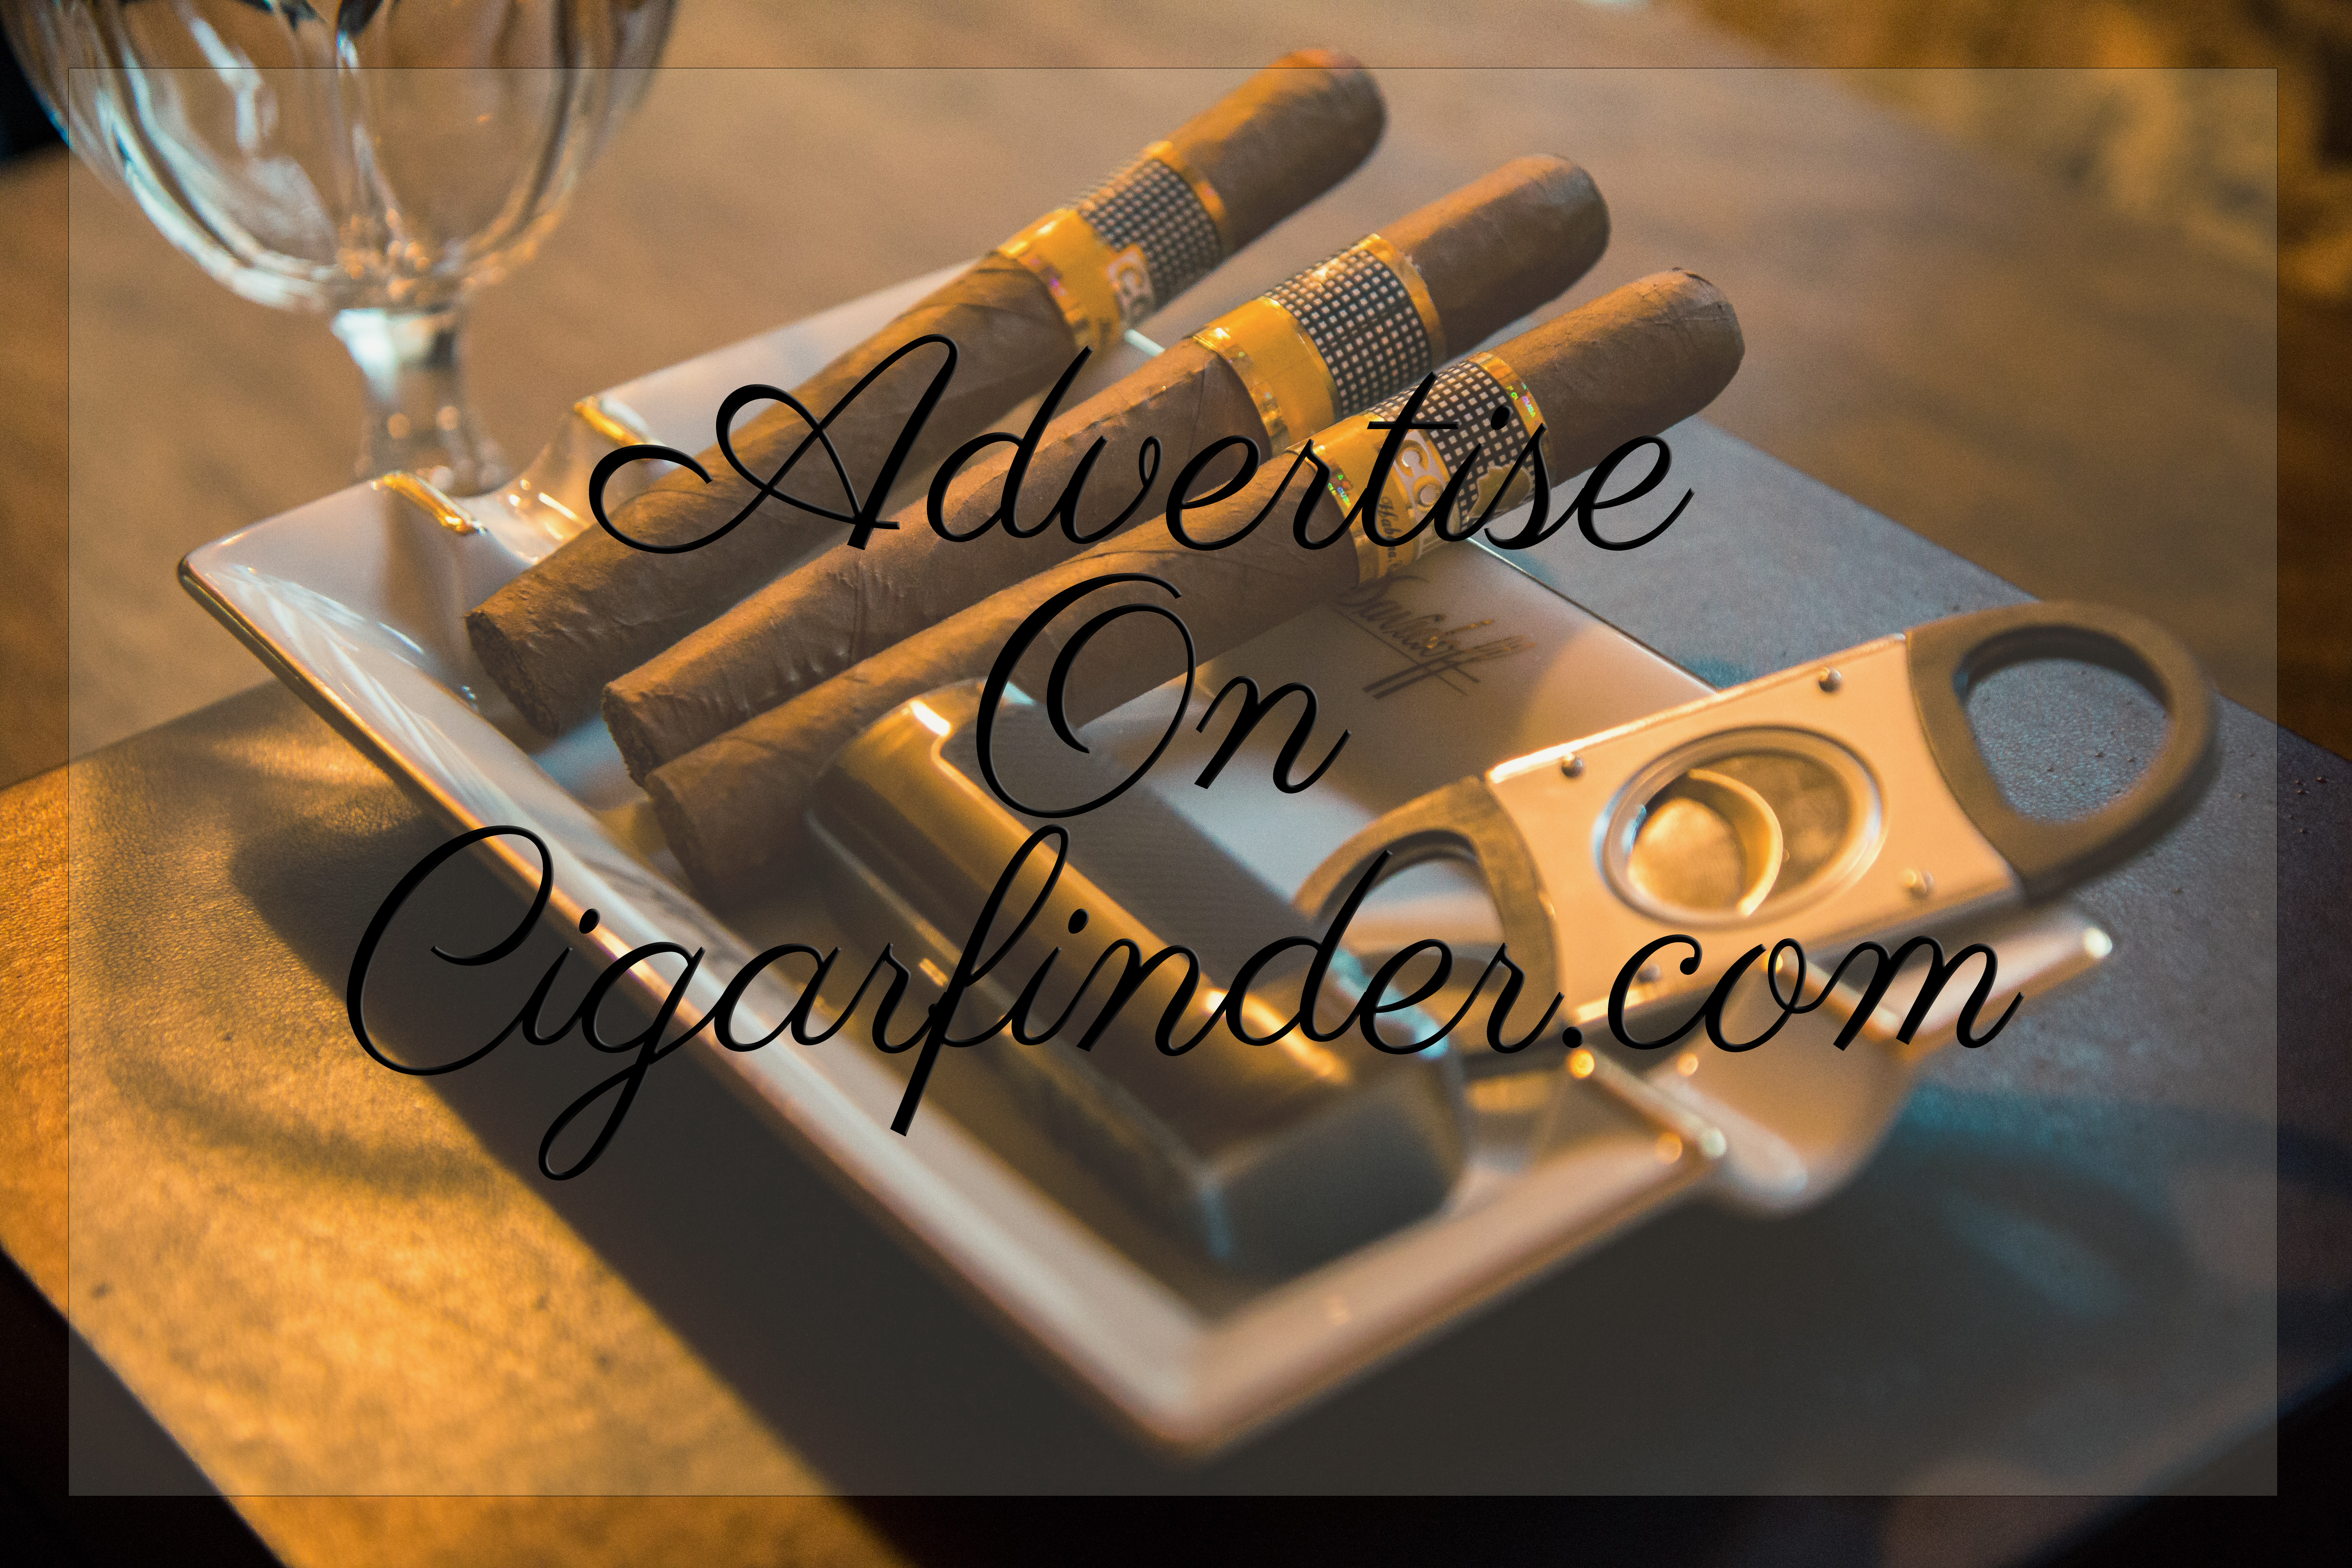 Advertise on Cigarfinder.com'